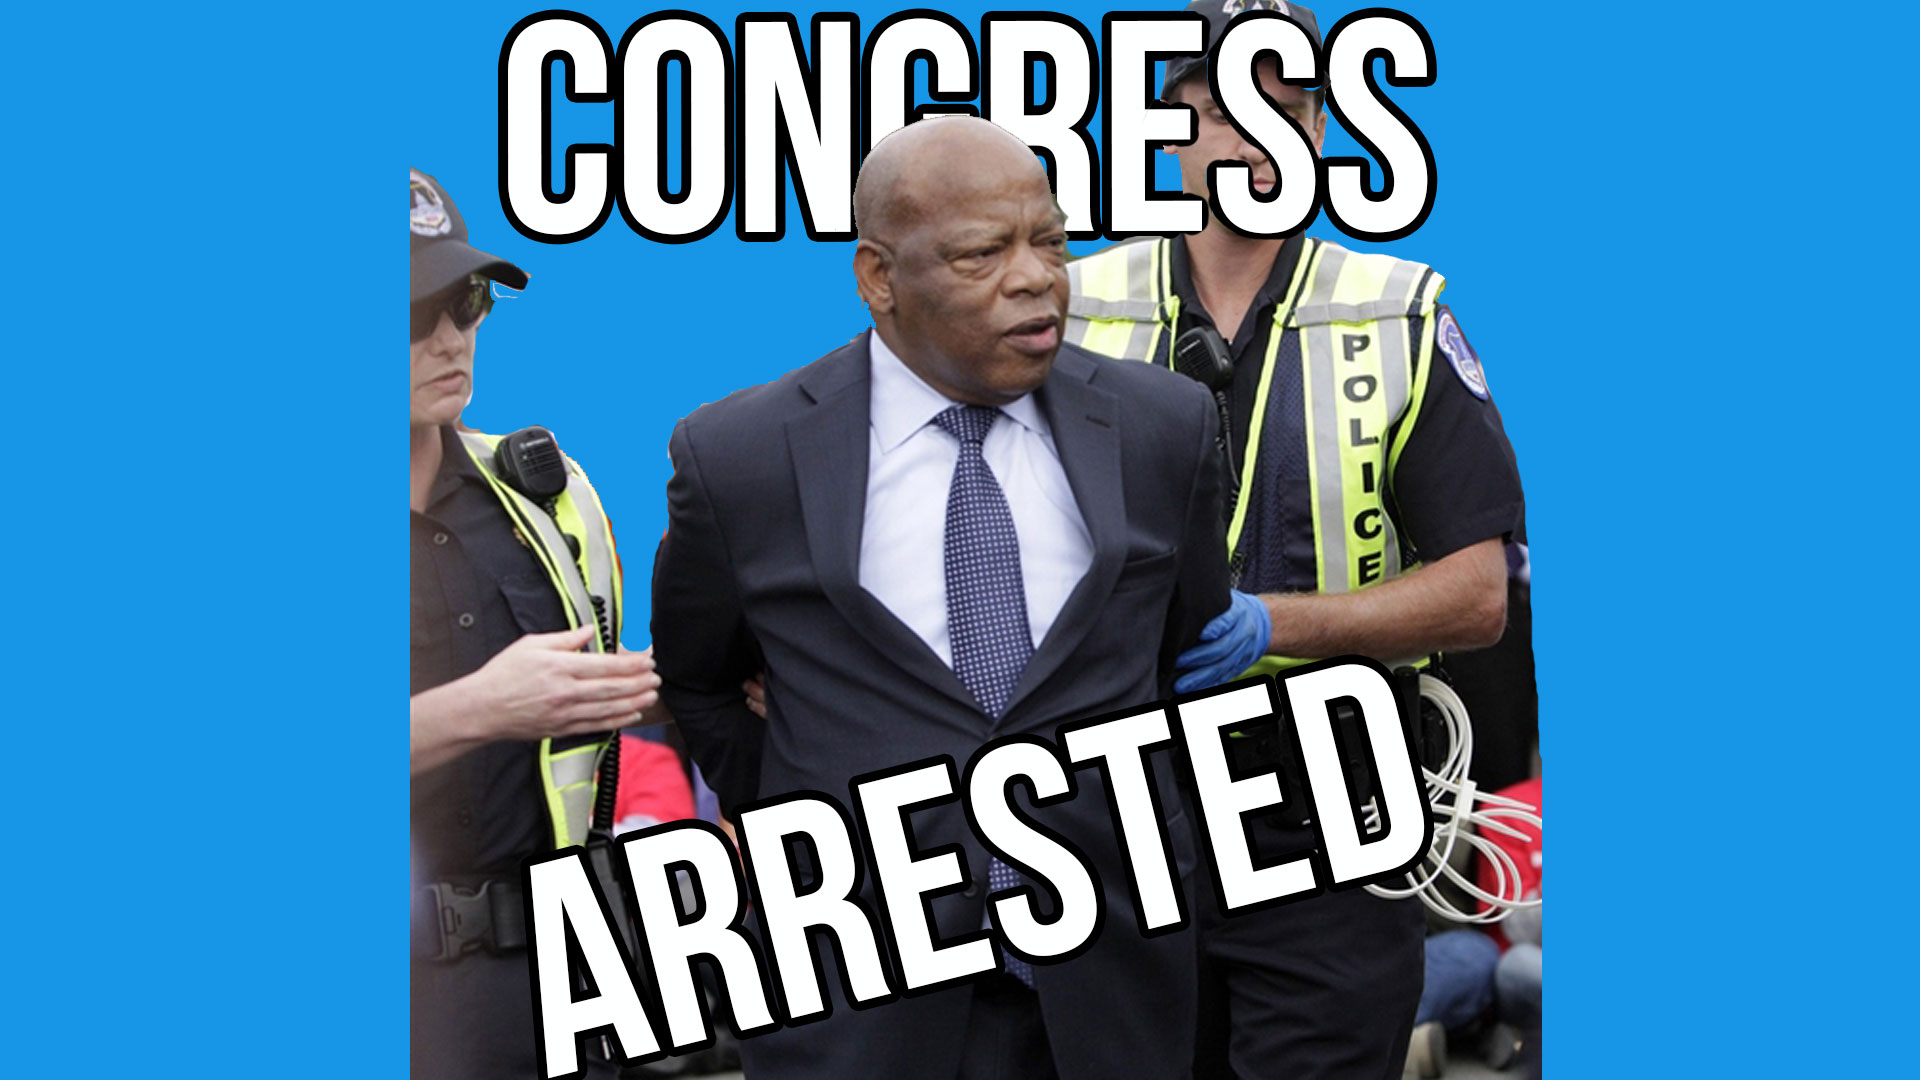 BREAKING Congress Arrested in DC!